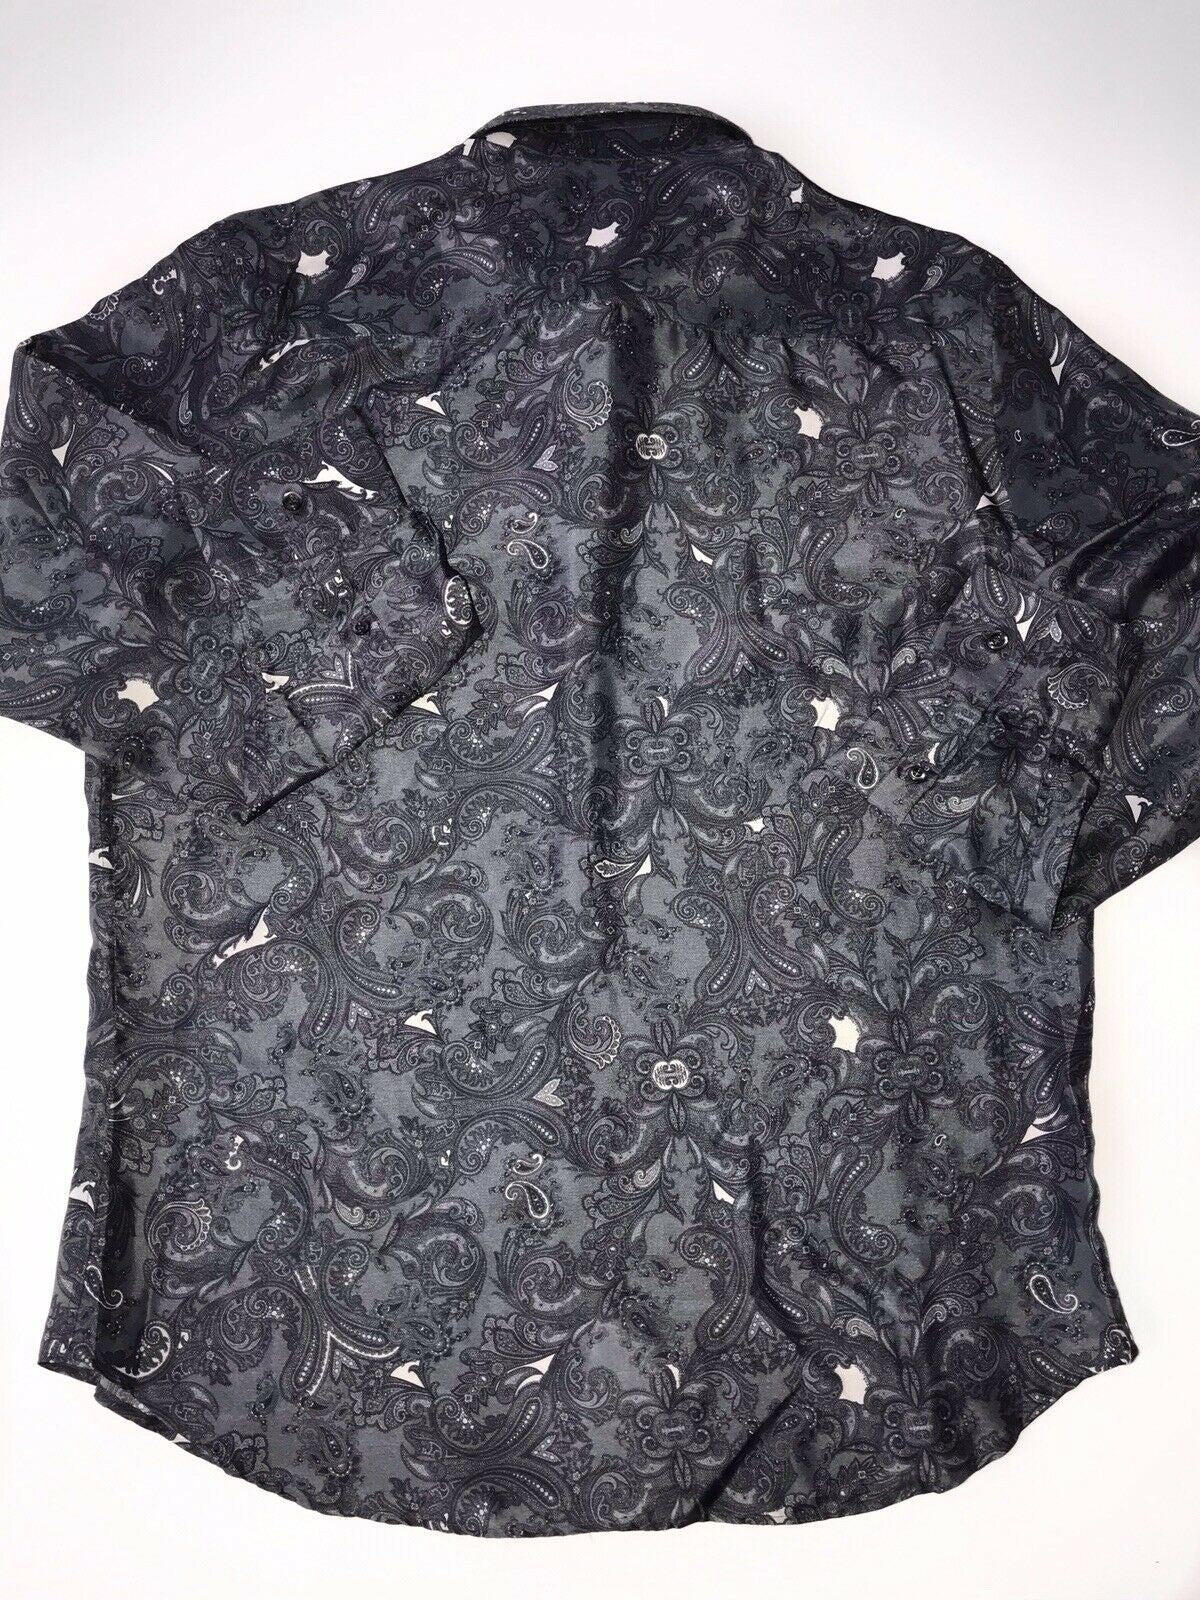 NWT $675 Emporio Armani Men's Gray Silk Dress Shirt Size 38/15 T1CC2T